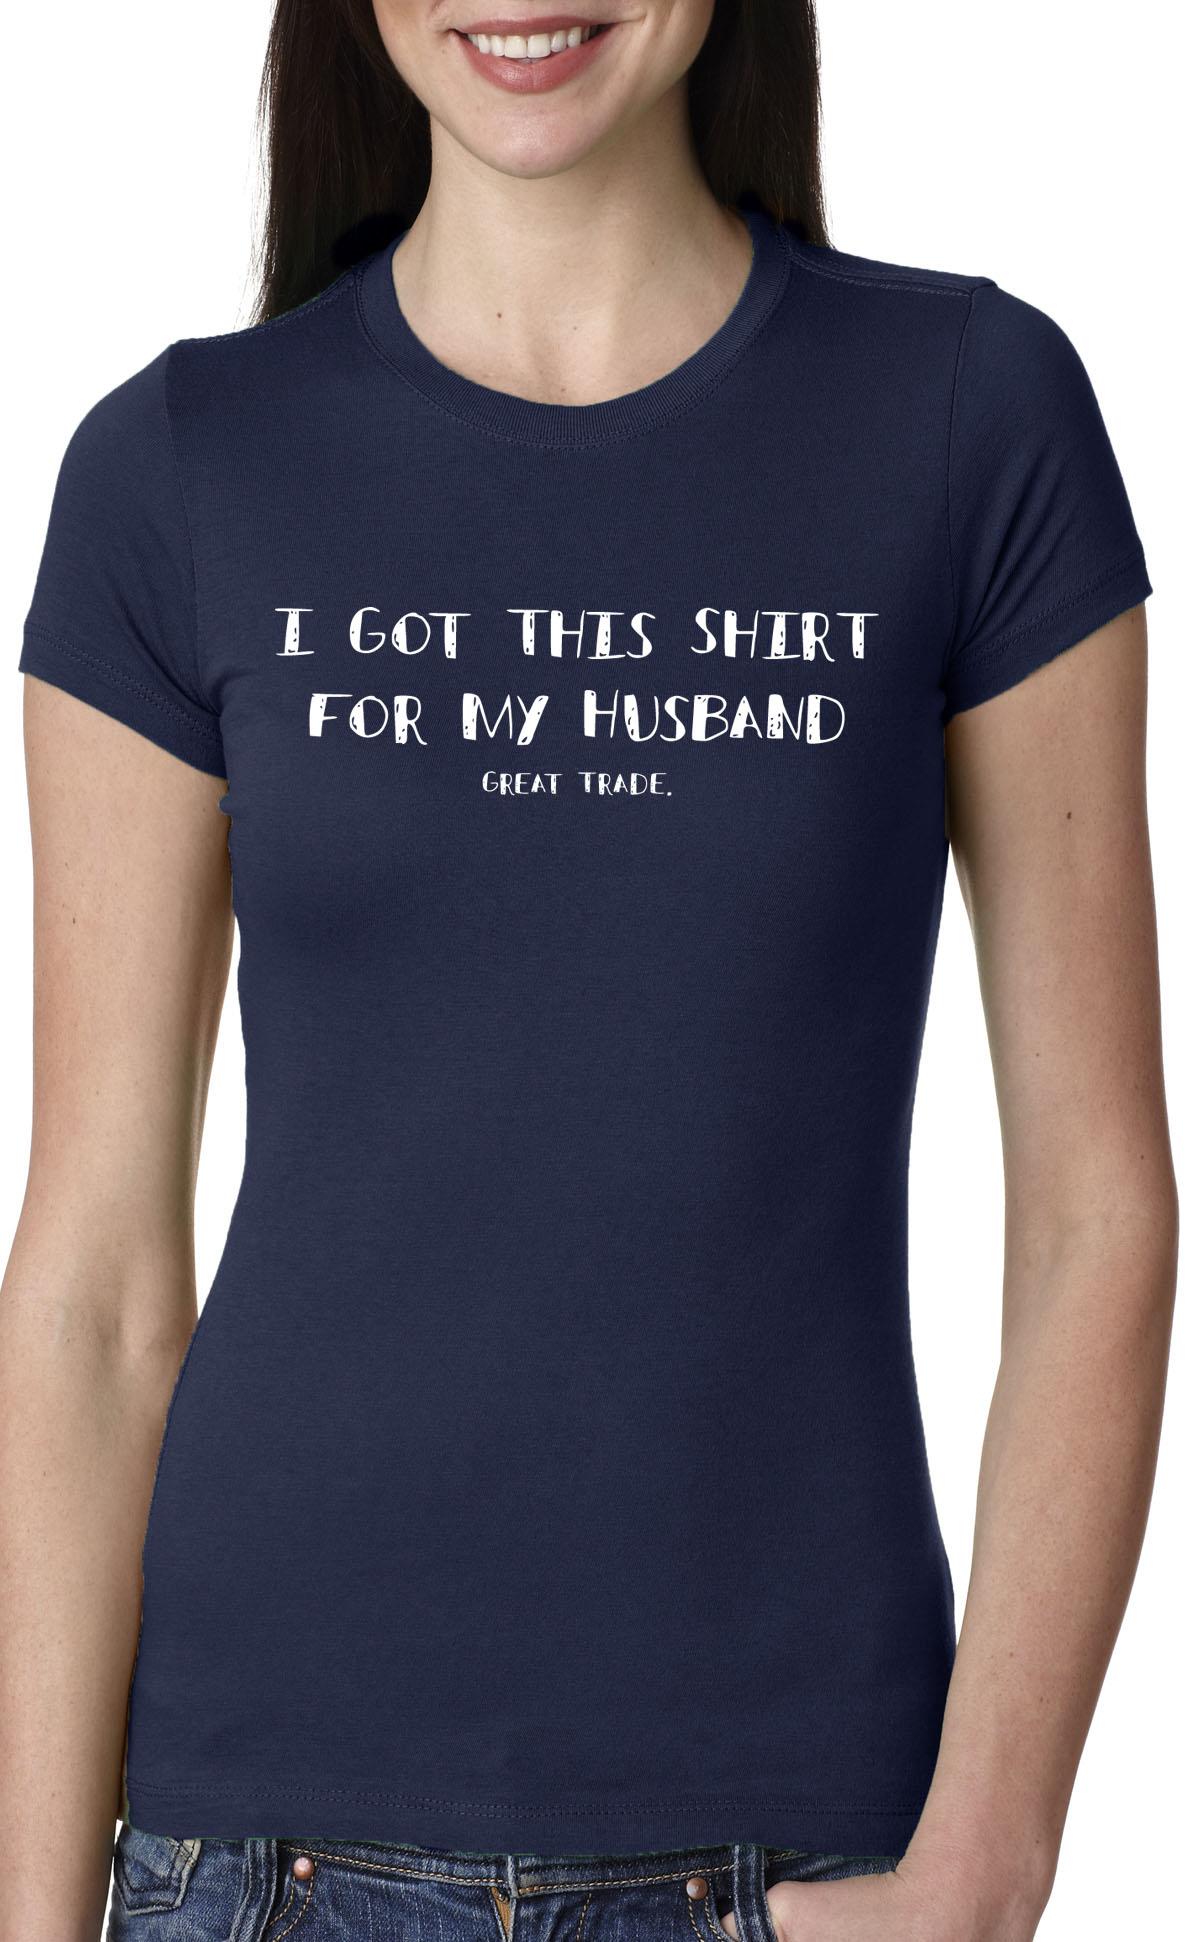 Women's I Got This Shirt for my Husband T Shirt great trade shirt funny tee S 